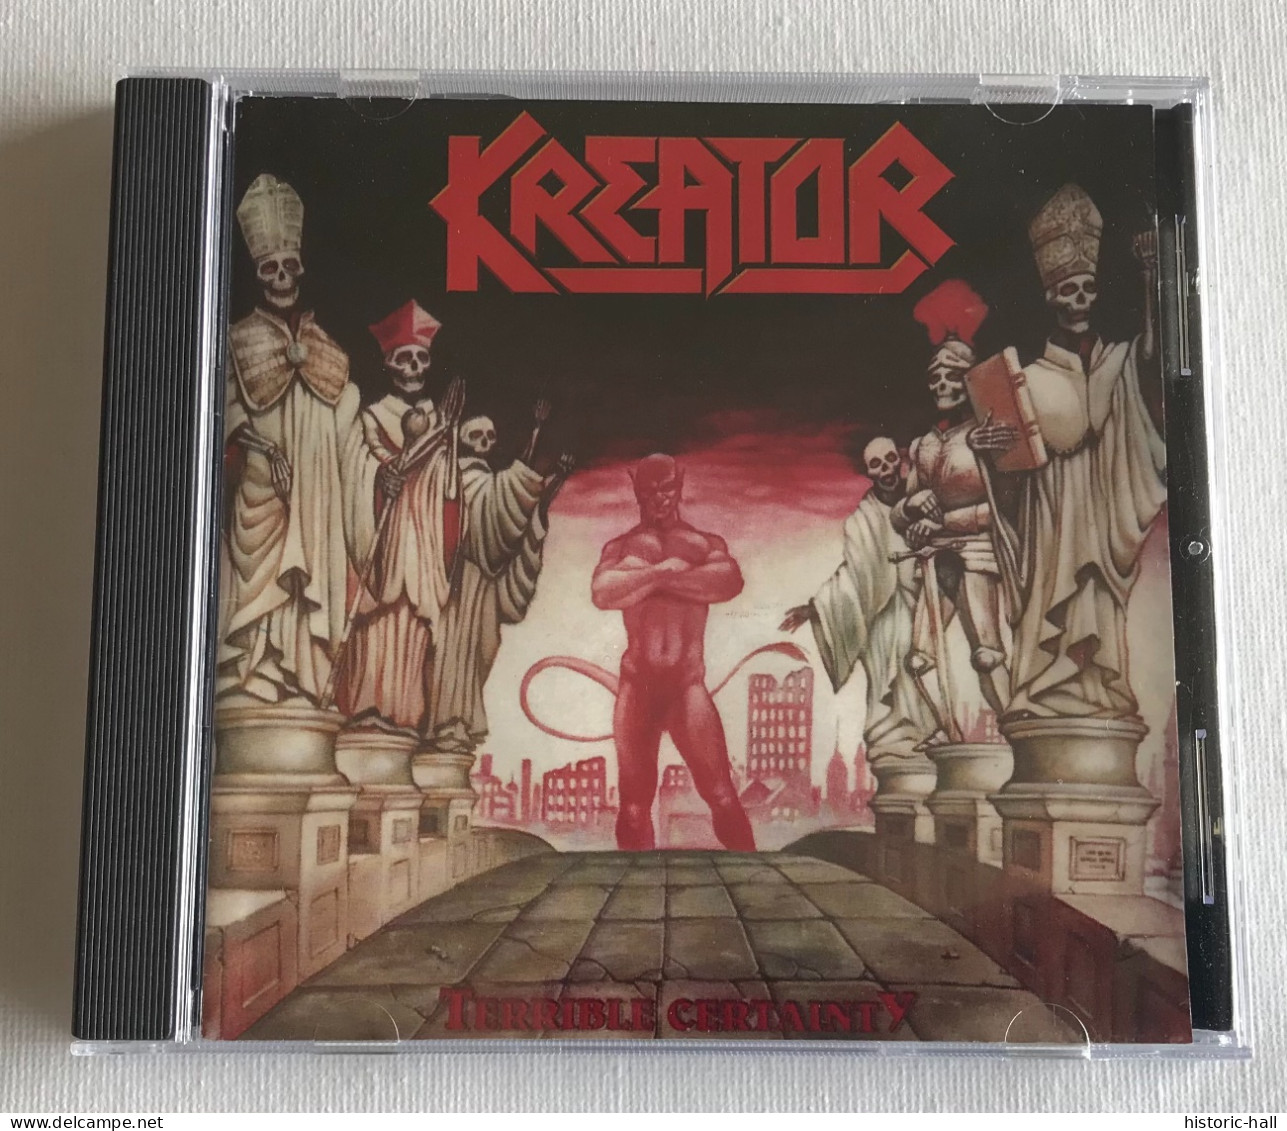 KREATOR - Terrible Certainty - CD - 1987/97  - Russian Press - Hard Rock En Metal